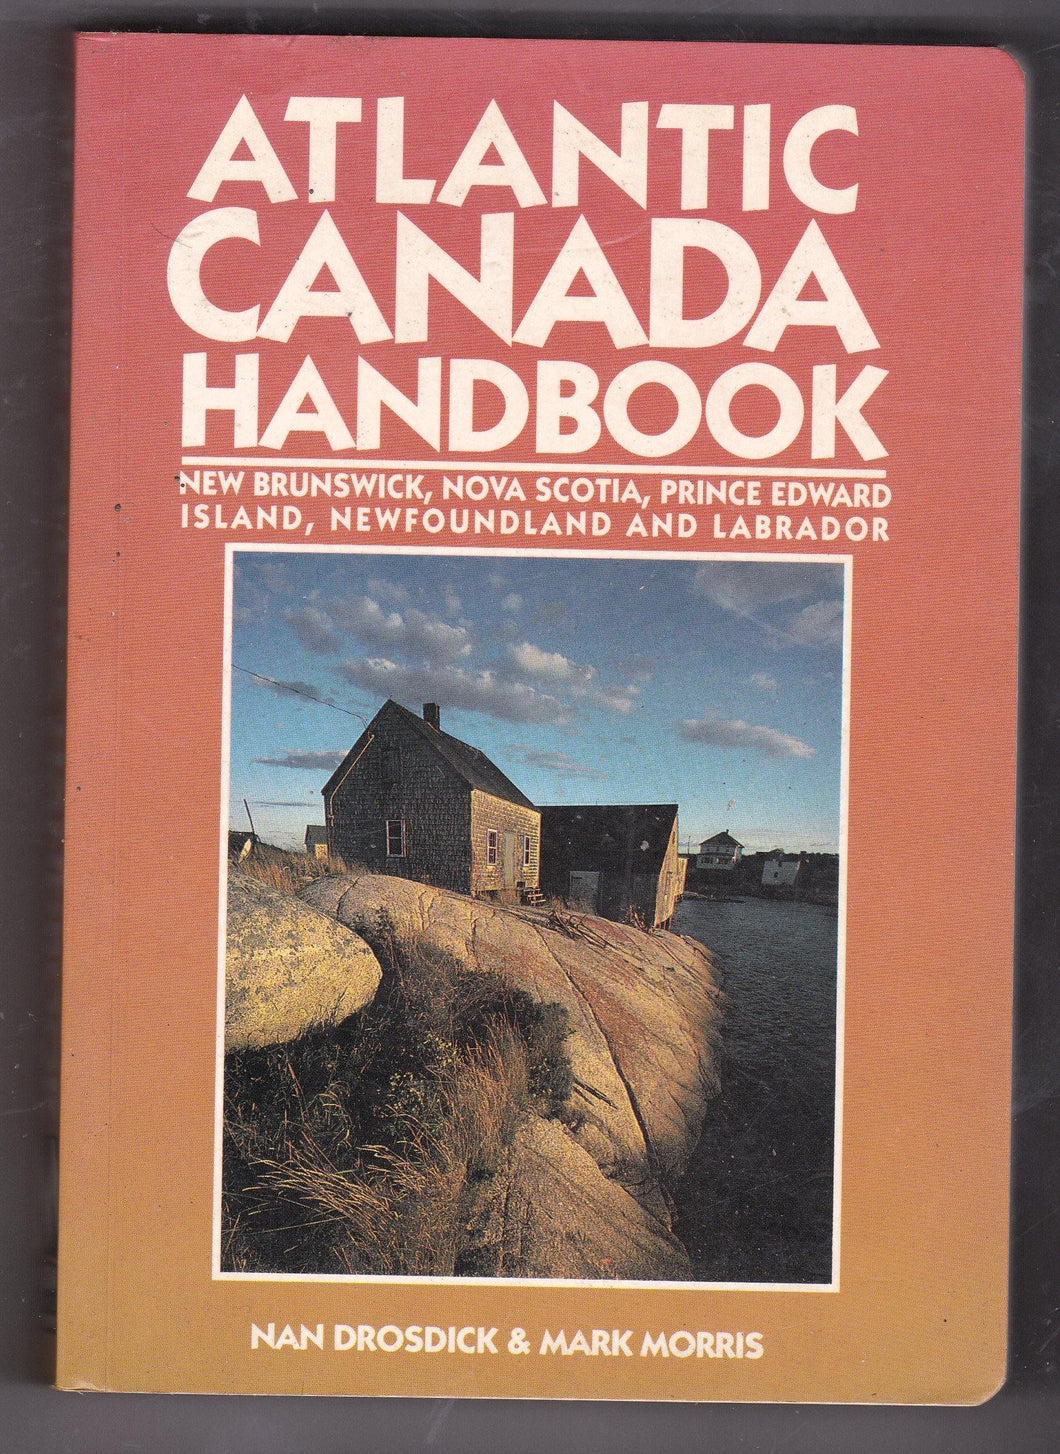 Atlantic Canada Handbook Travel Guide 1995 Drosdick Morris - TulipStuff